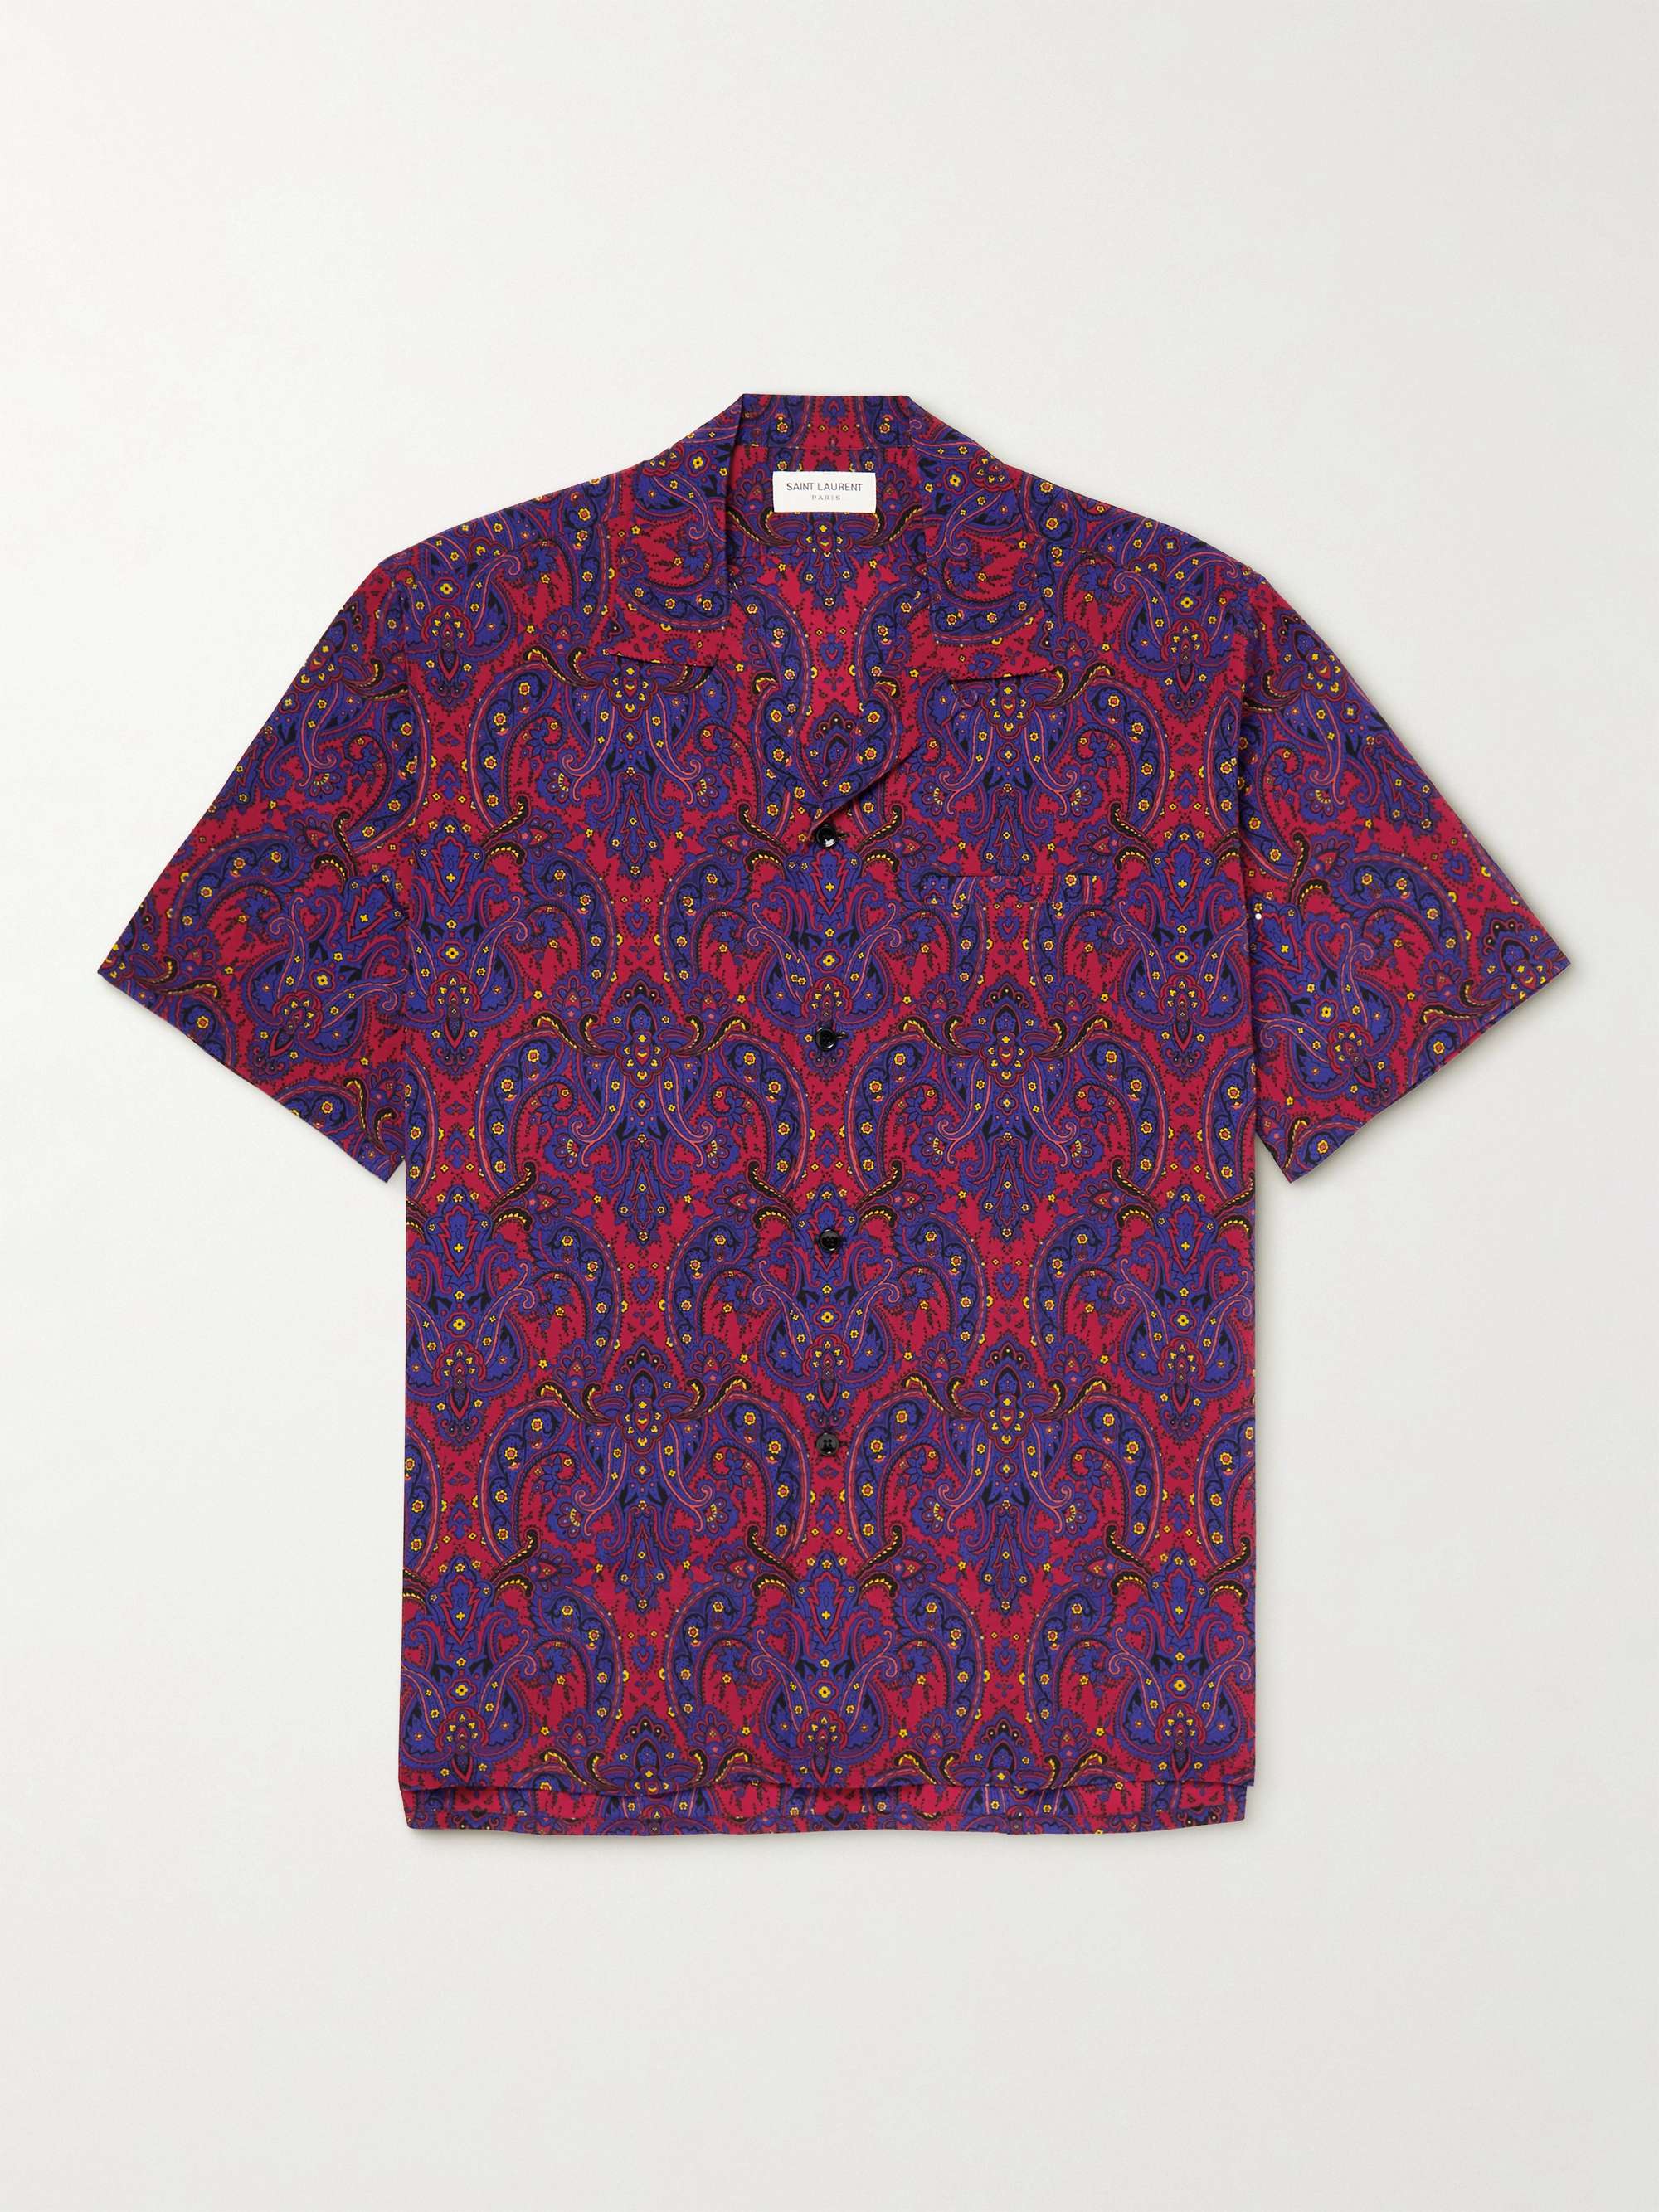 SAINT LAURENT Camp-Collar Paisley-Print Silk Shirt